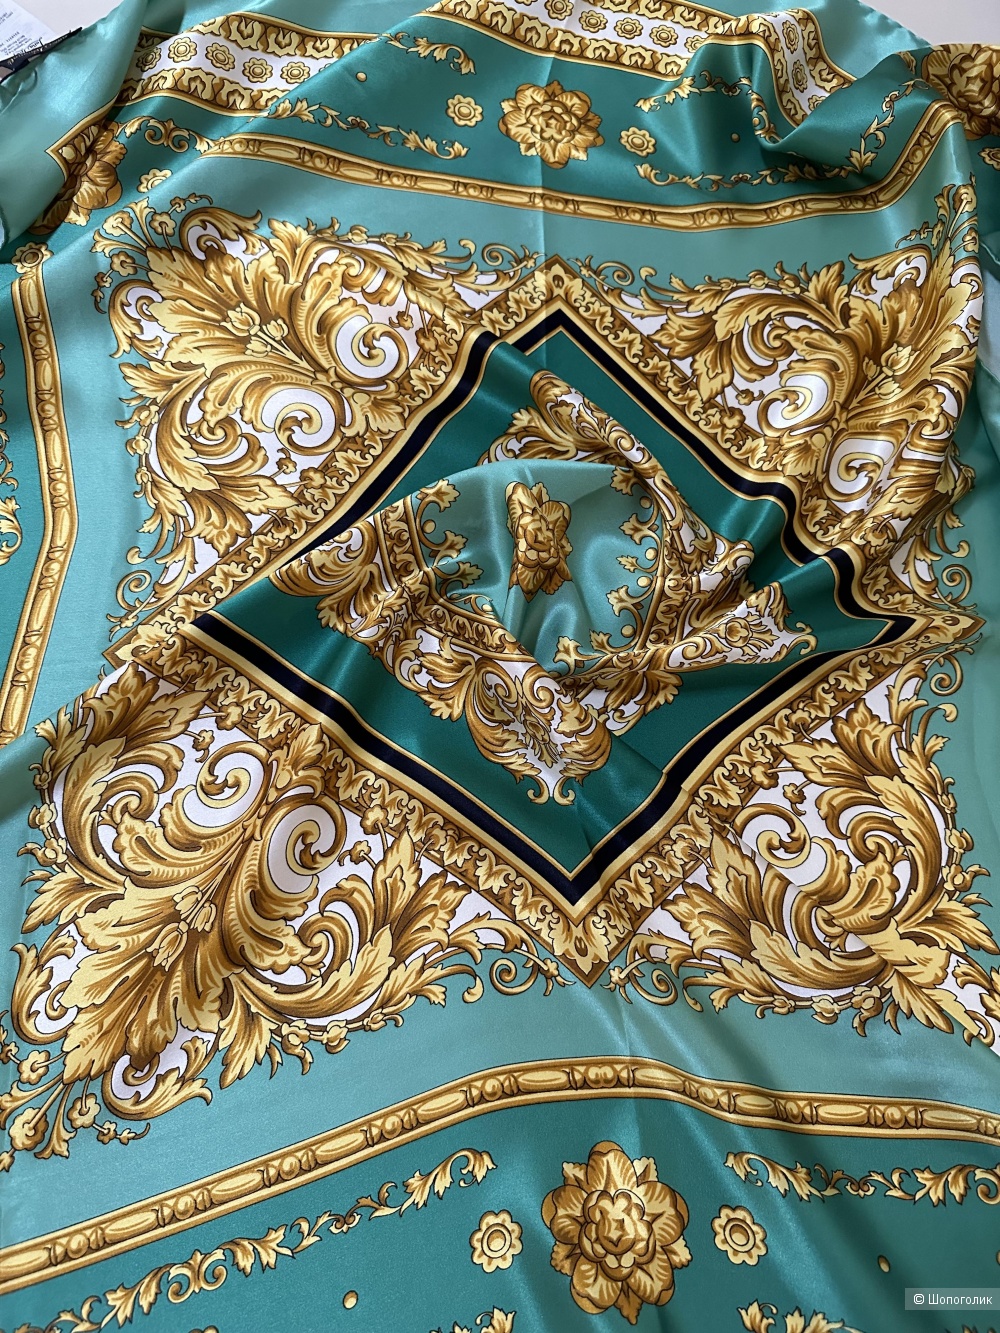 Шелковый платок Luisa Spagnoli 90x90 см.